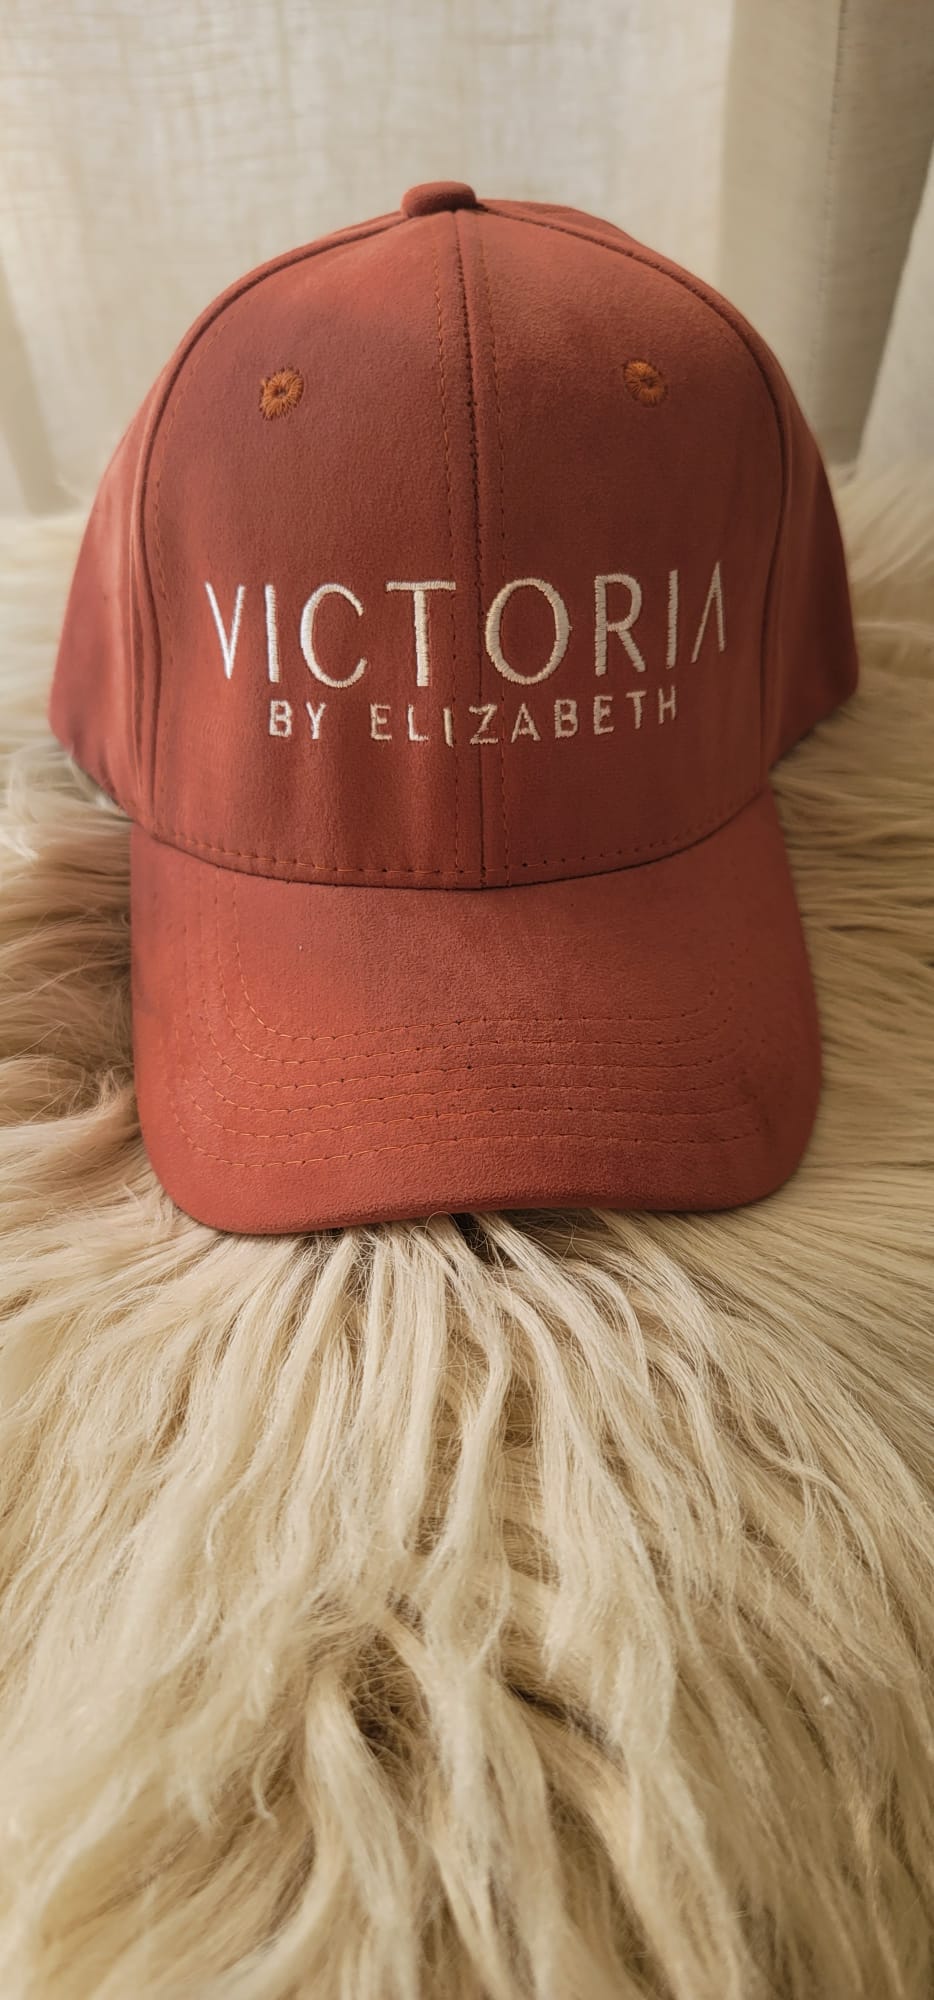 Victoria by Elizabeth hat